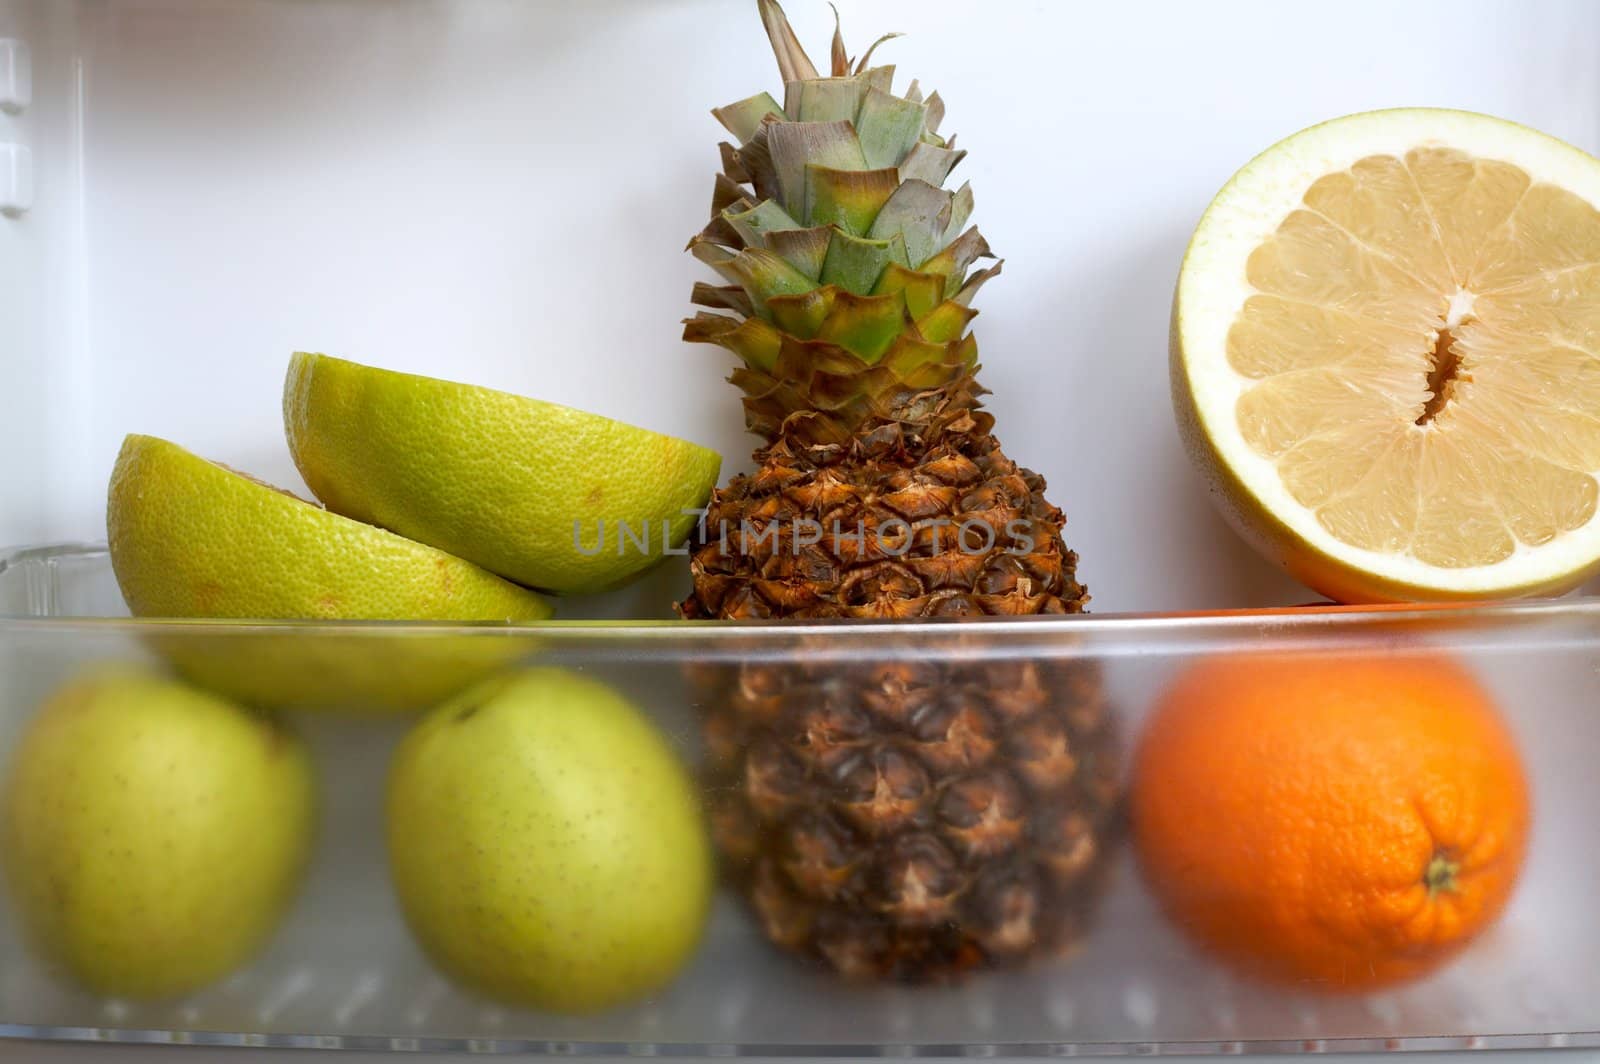 Fruits in refrigerator by velkol